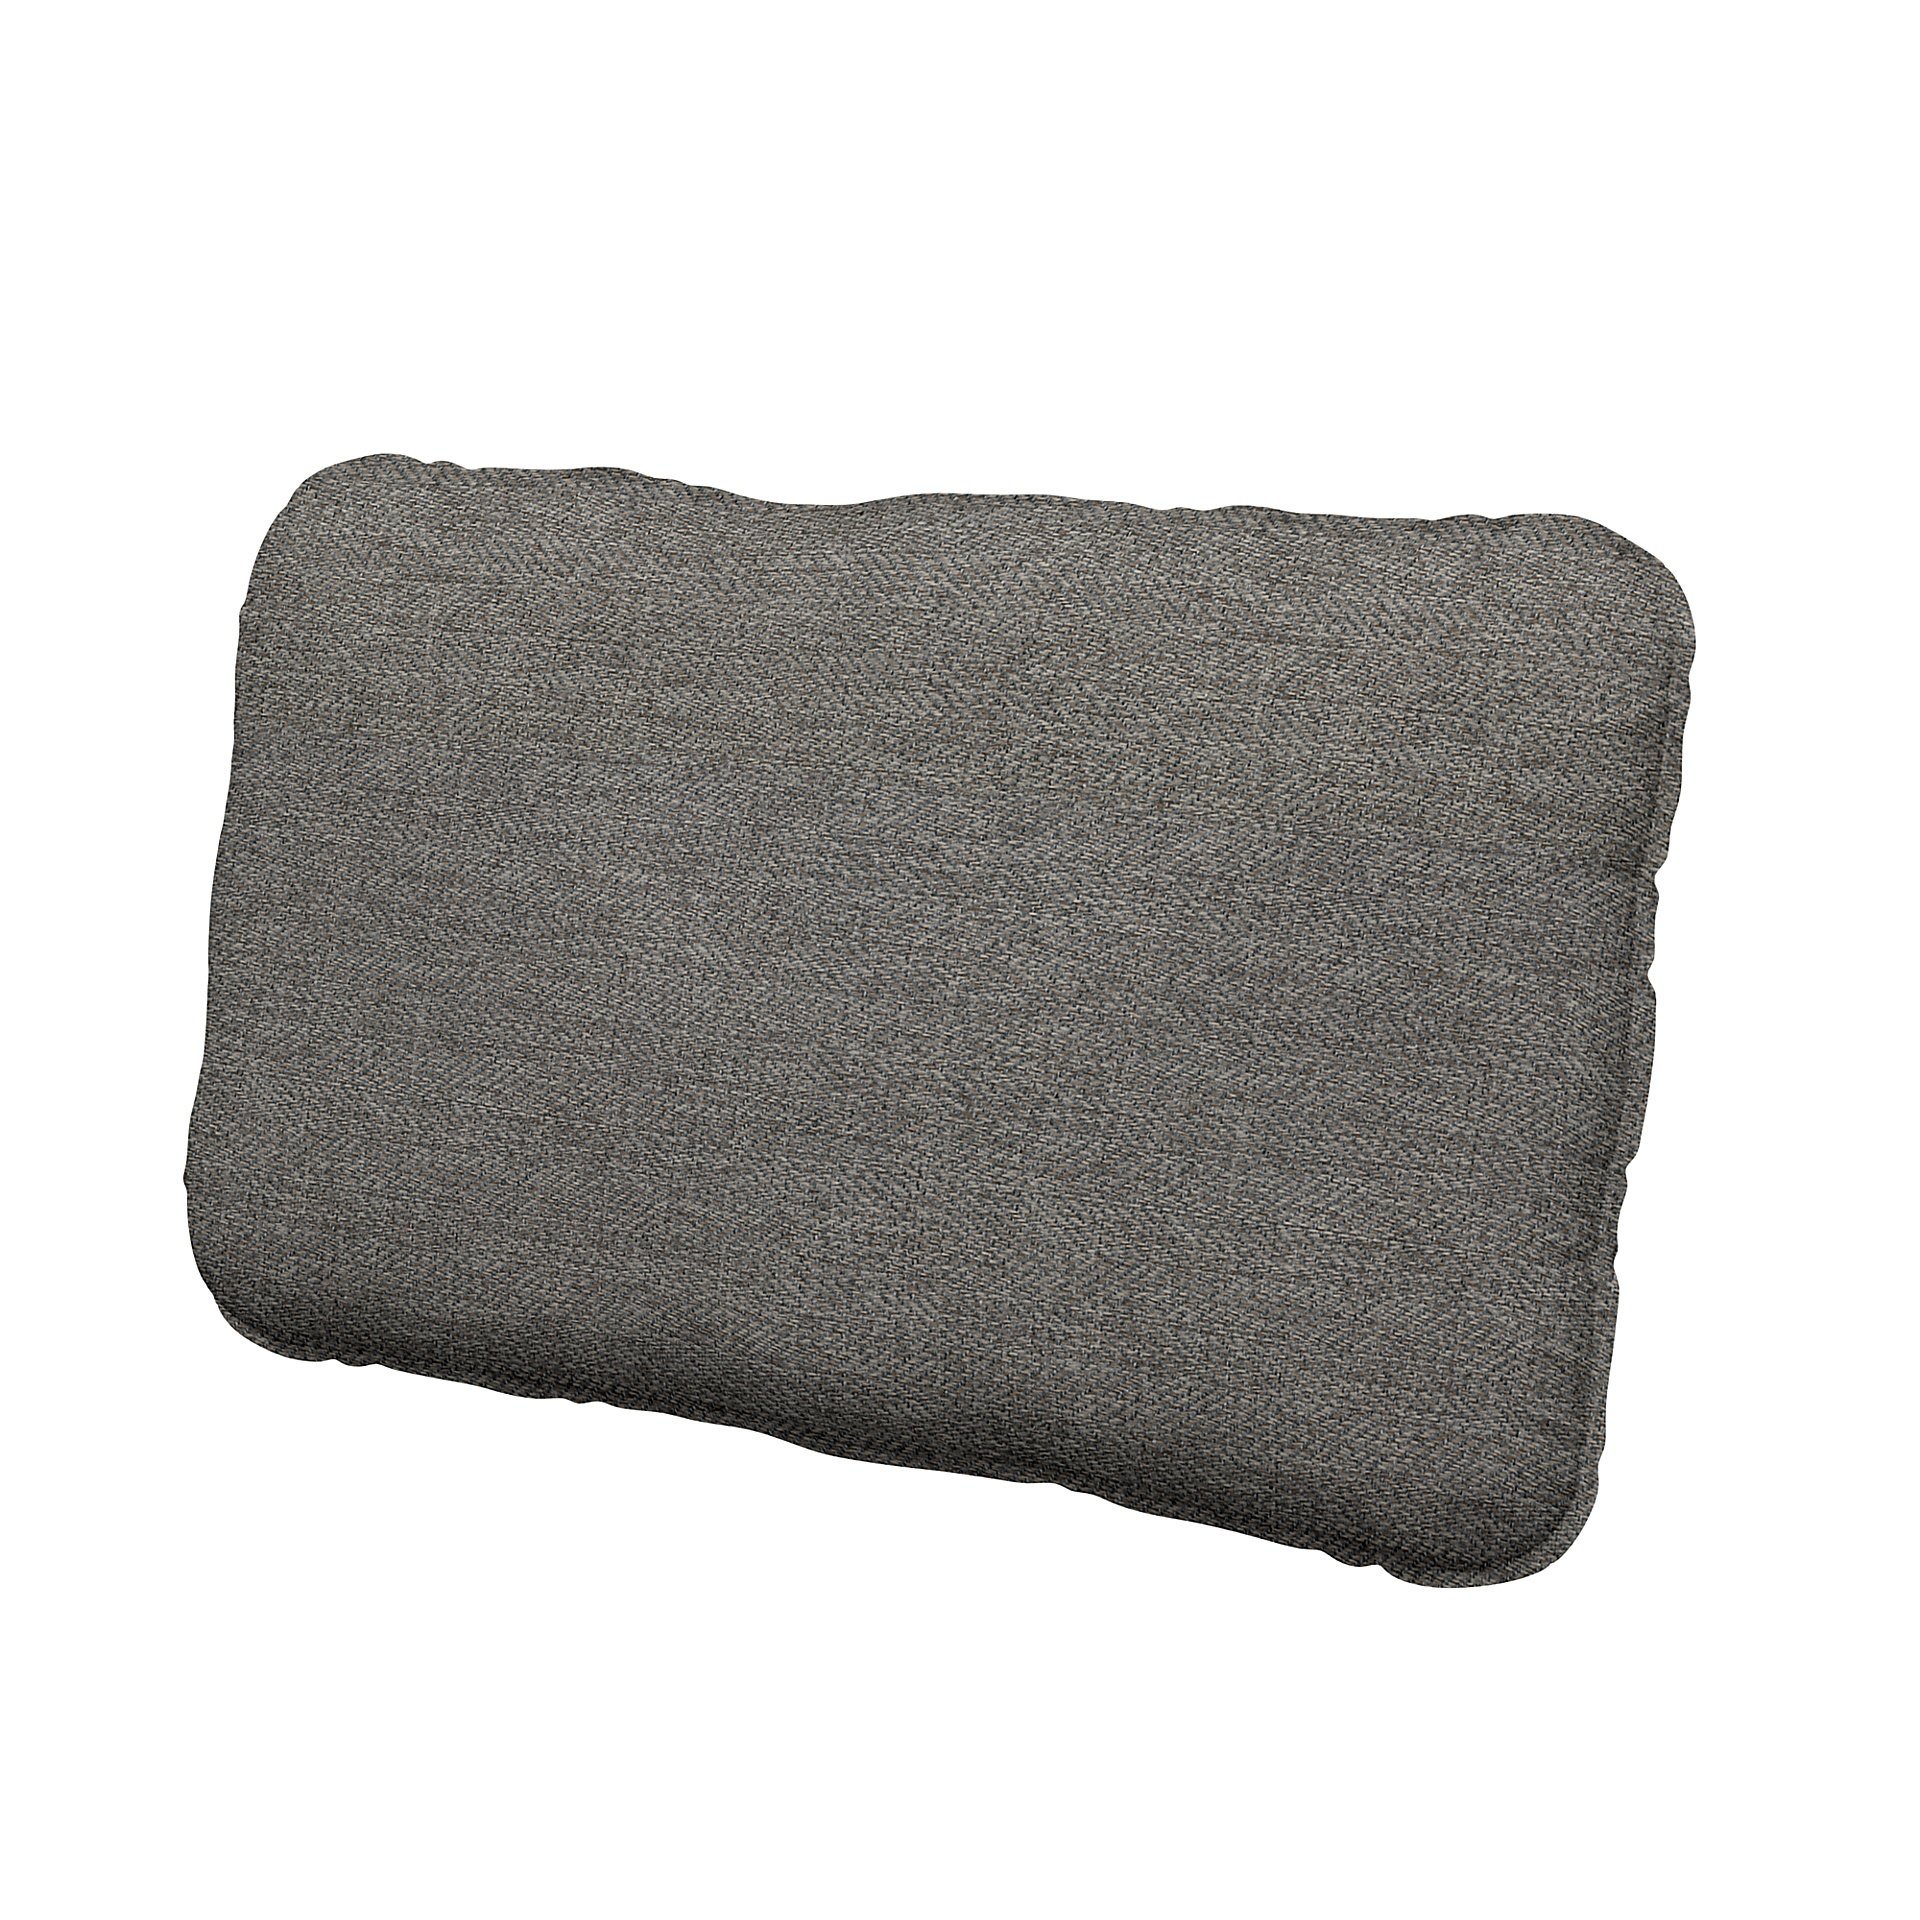 IKEA - Vallentuna back cushion cover 40x75cm, Taupe, Boucle & Texture - Bemz